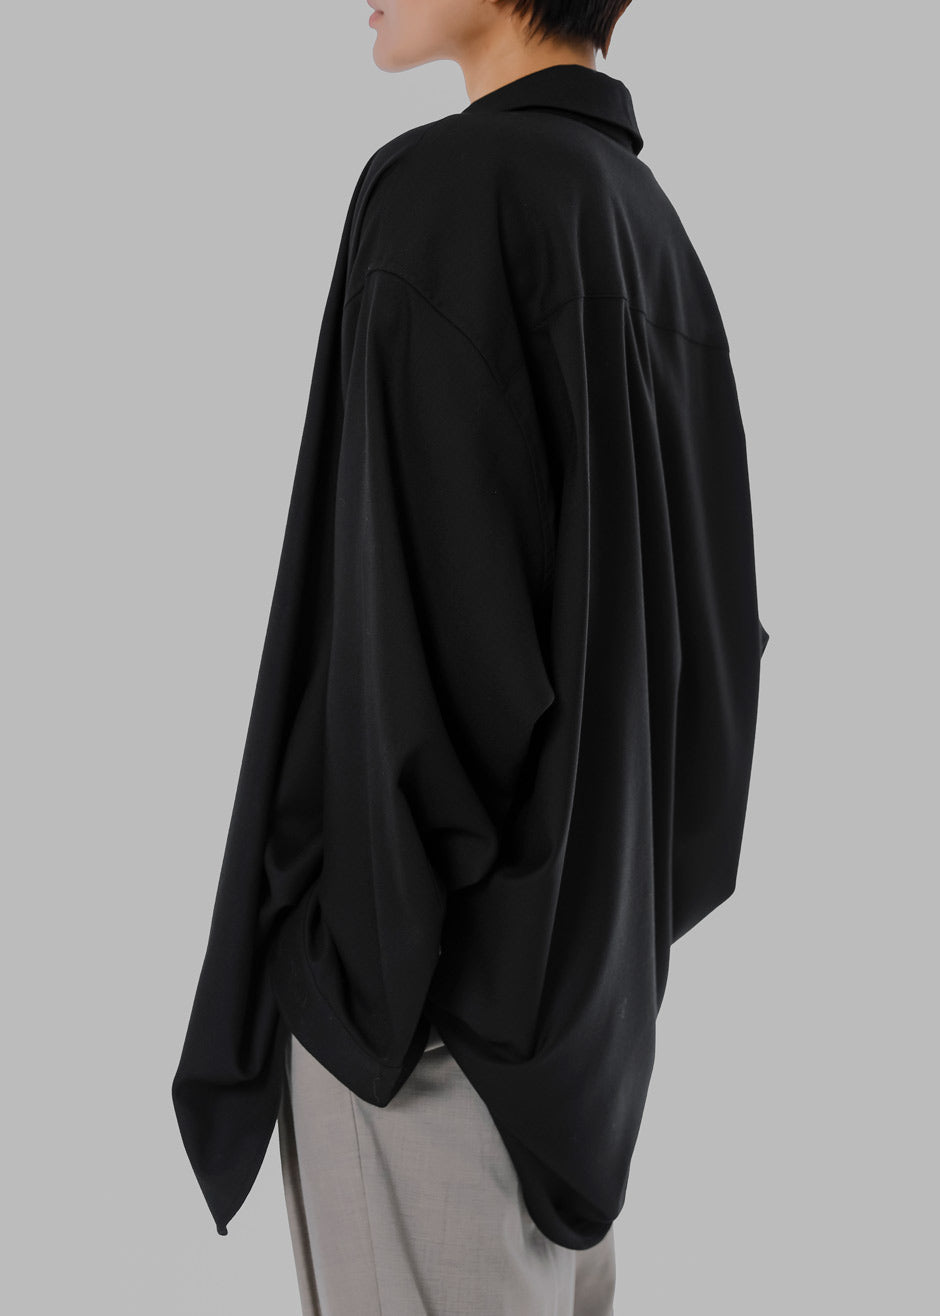 Gelso Shirt - Black - 6